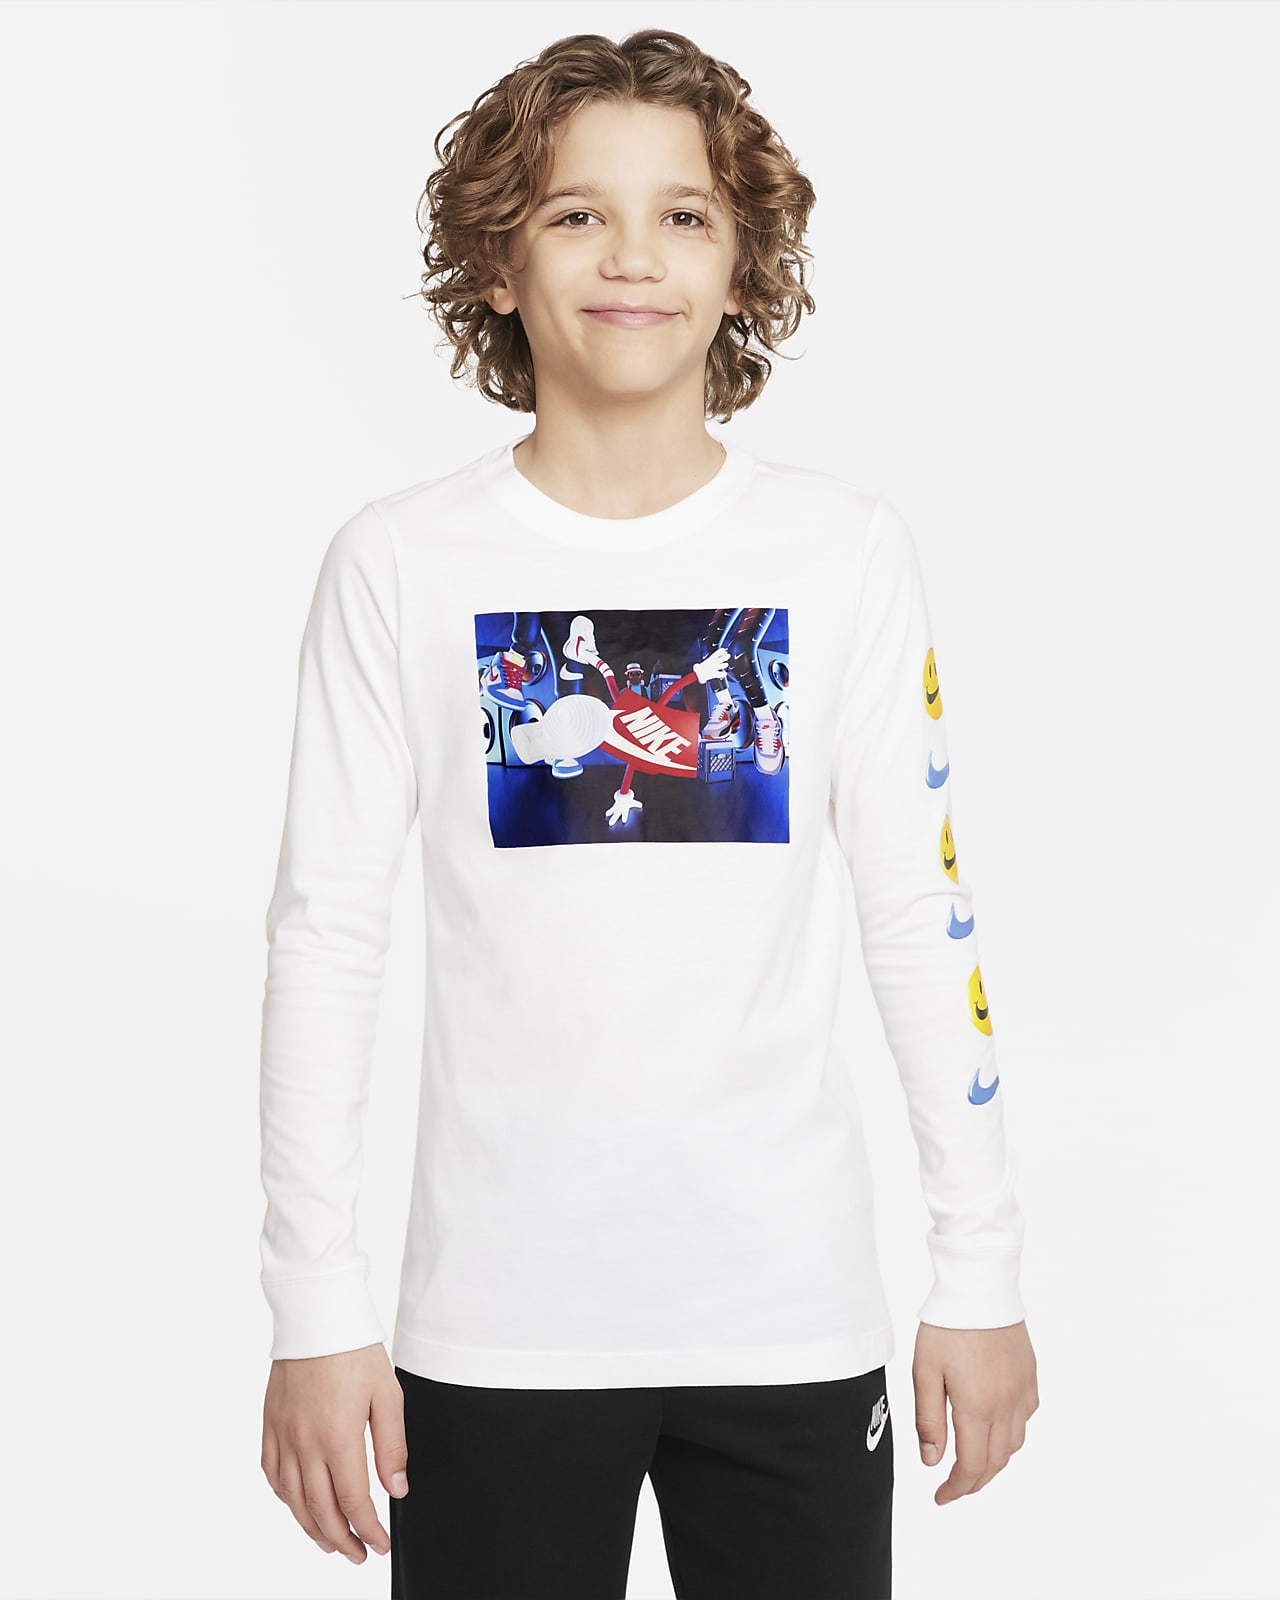 Nike Sportswear Big Kids' (Boys') Long-Sleeve T-Shirt